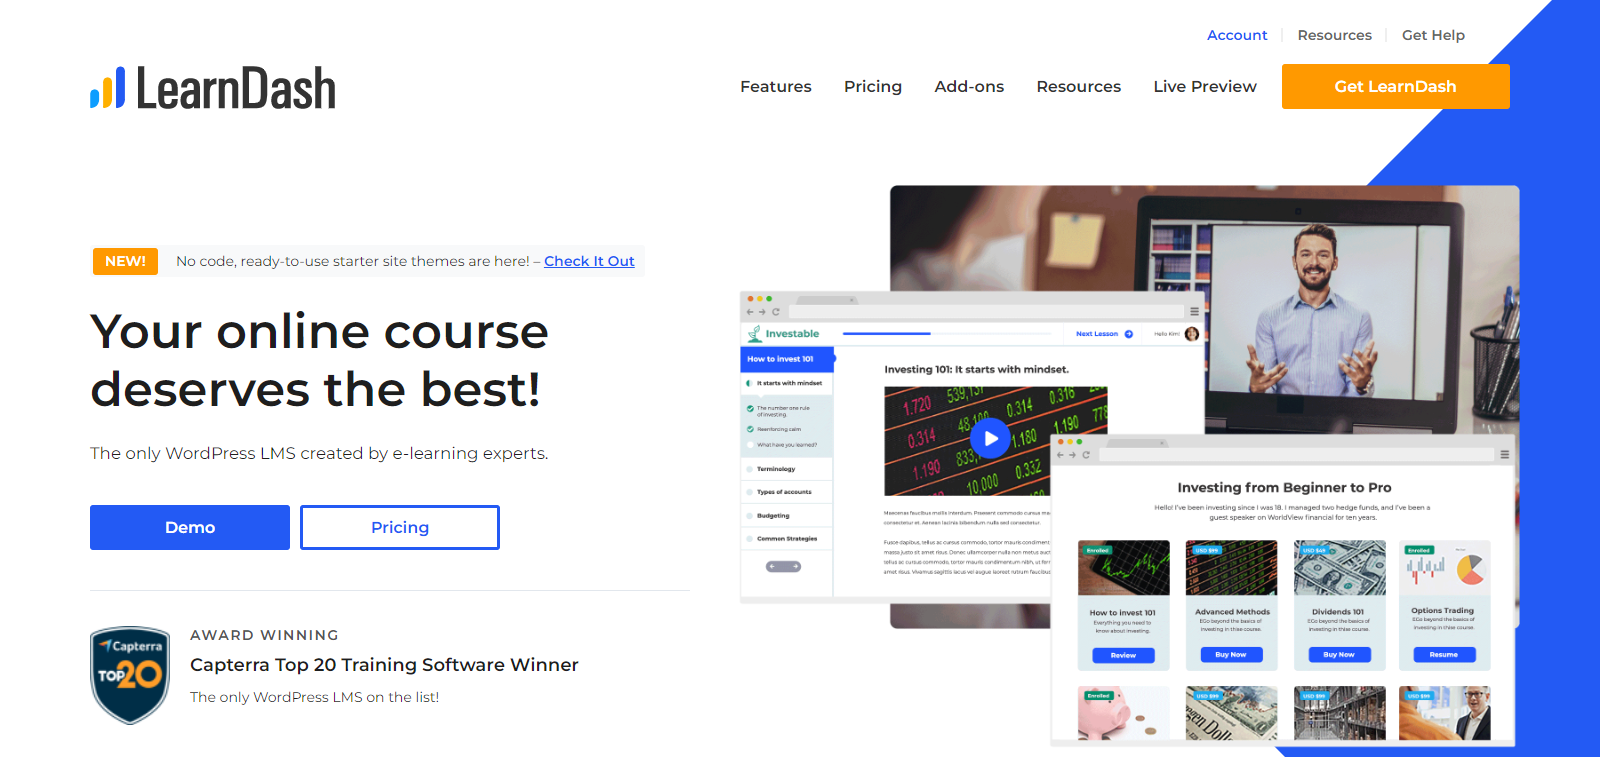 Learndash Homepage Official Website